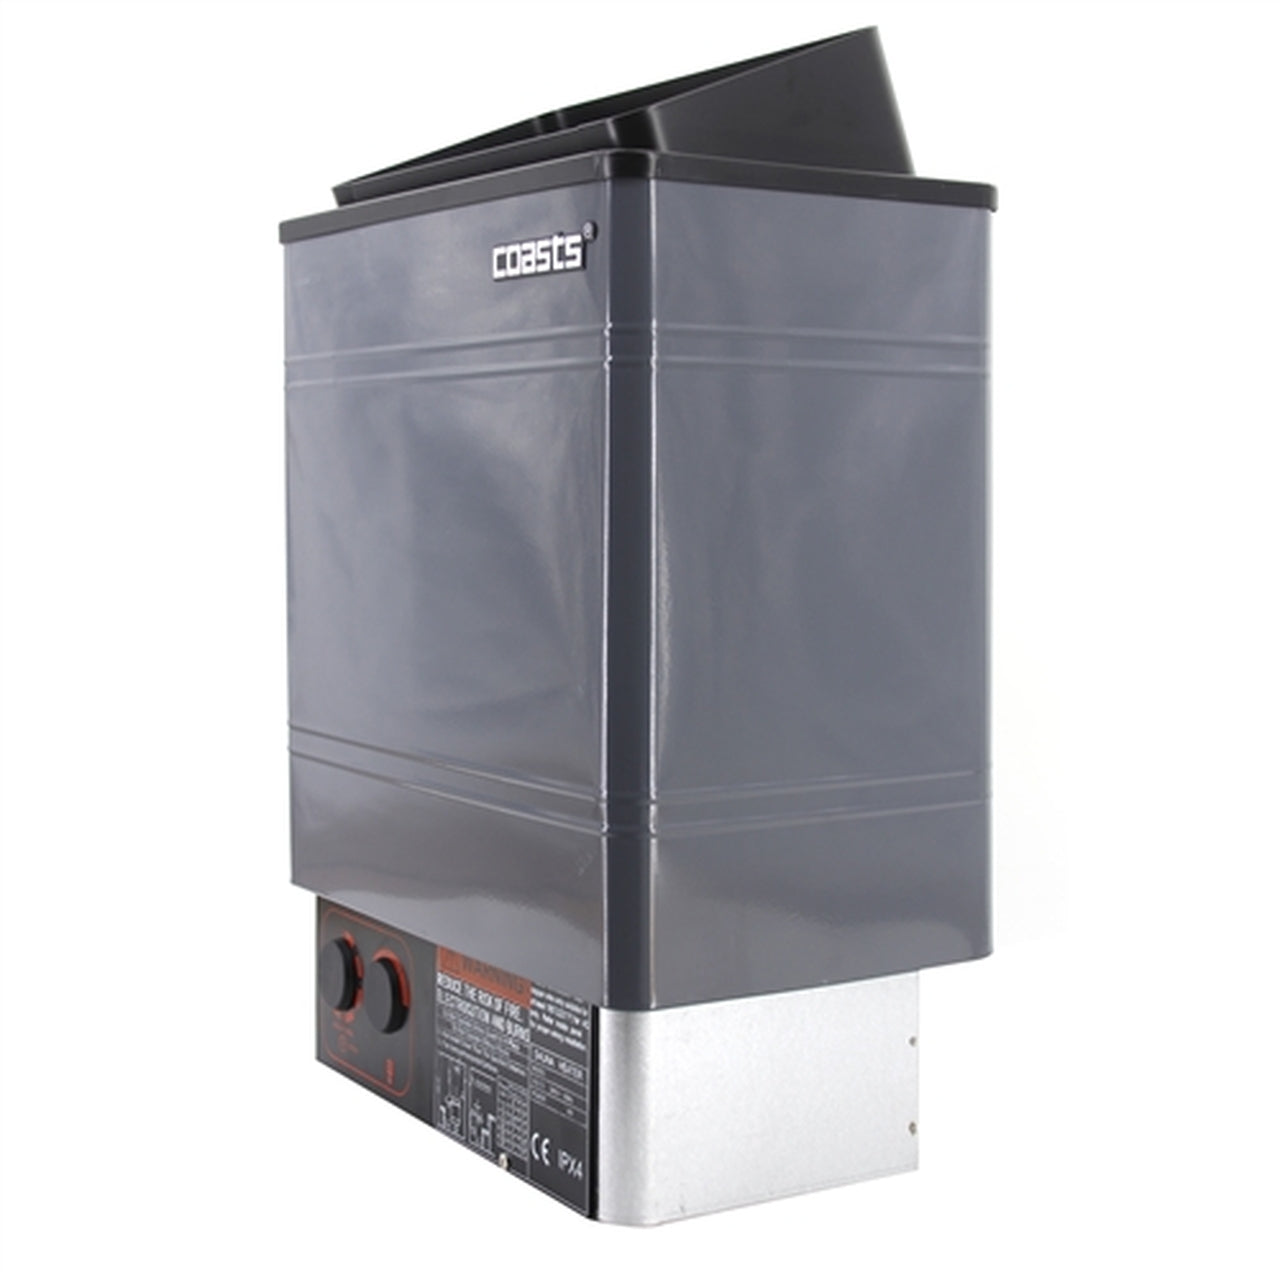 Aleko COASTS Sauna Heater for Spa Sauna Room - 4.5KW - 240V - Inner Controller - CON 3 Outer Digital Controller